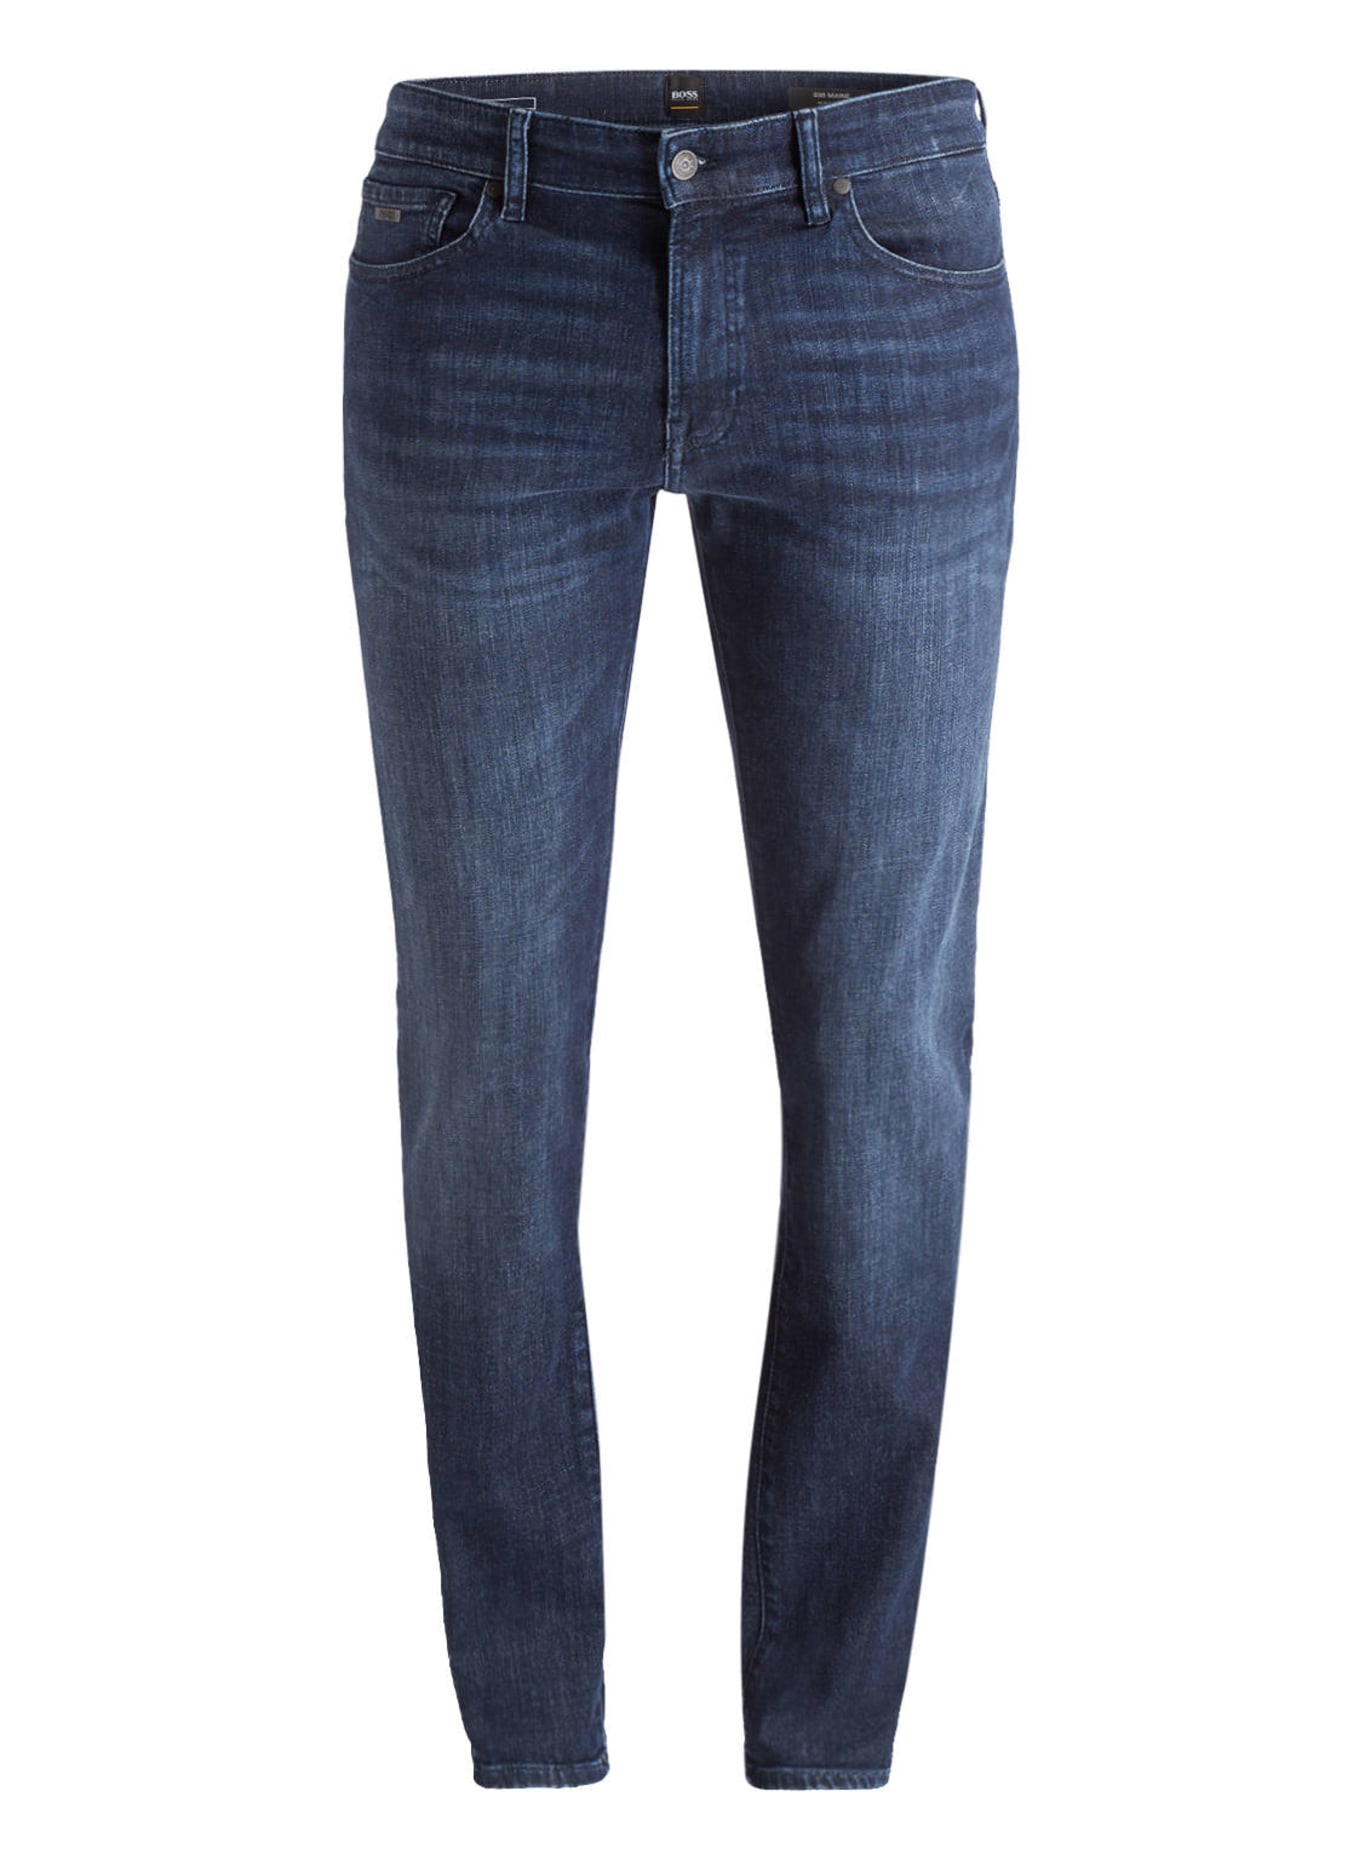 BOSS Jeans MAINE Regular Fit, Farbe: 417 NAVY (Bild 1)